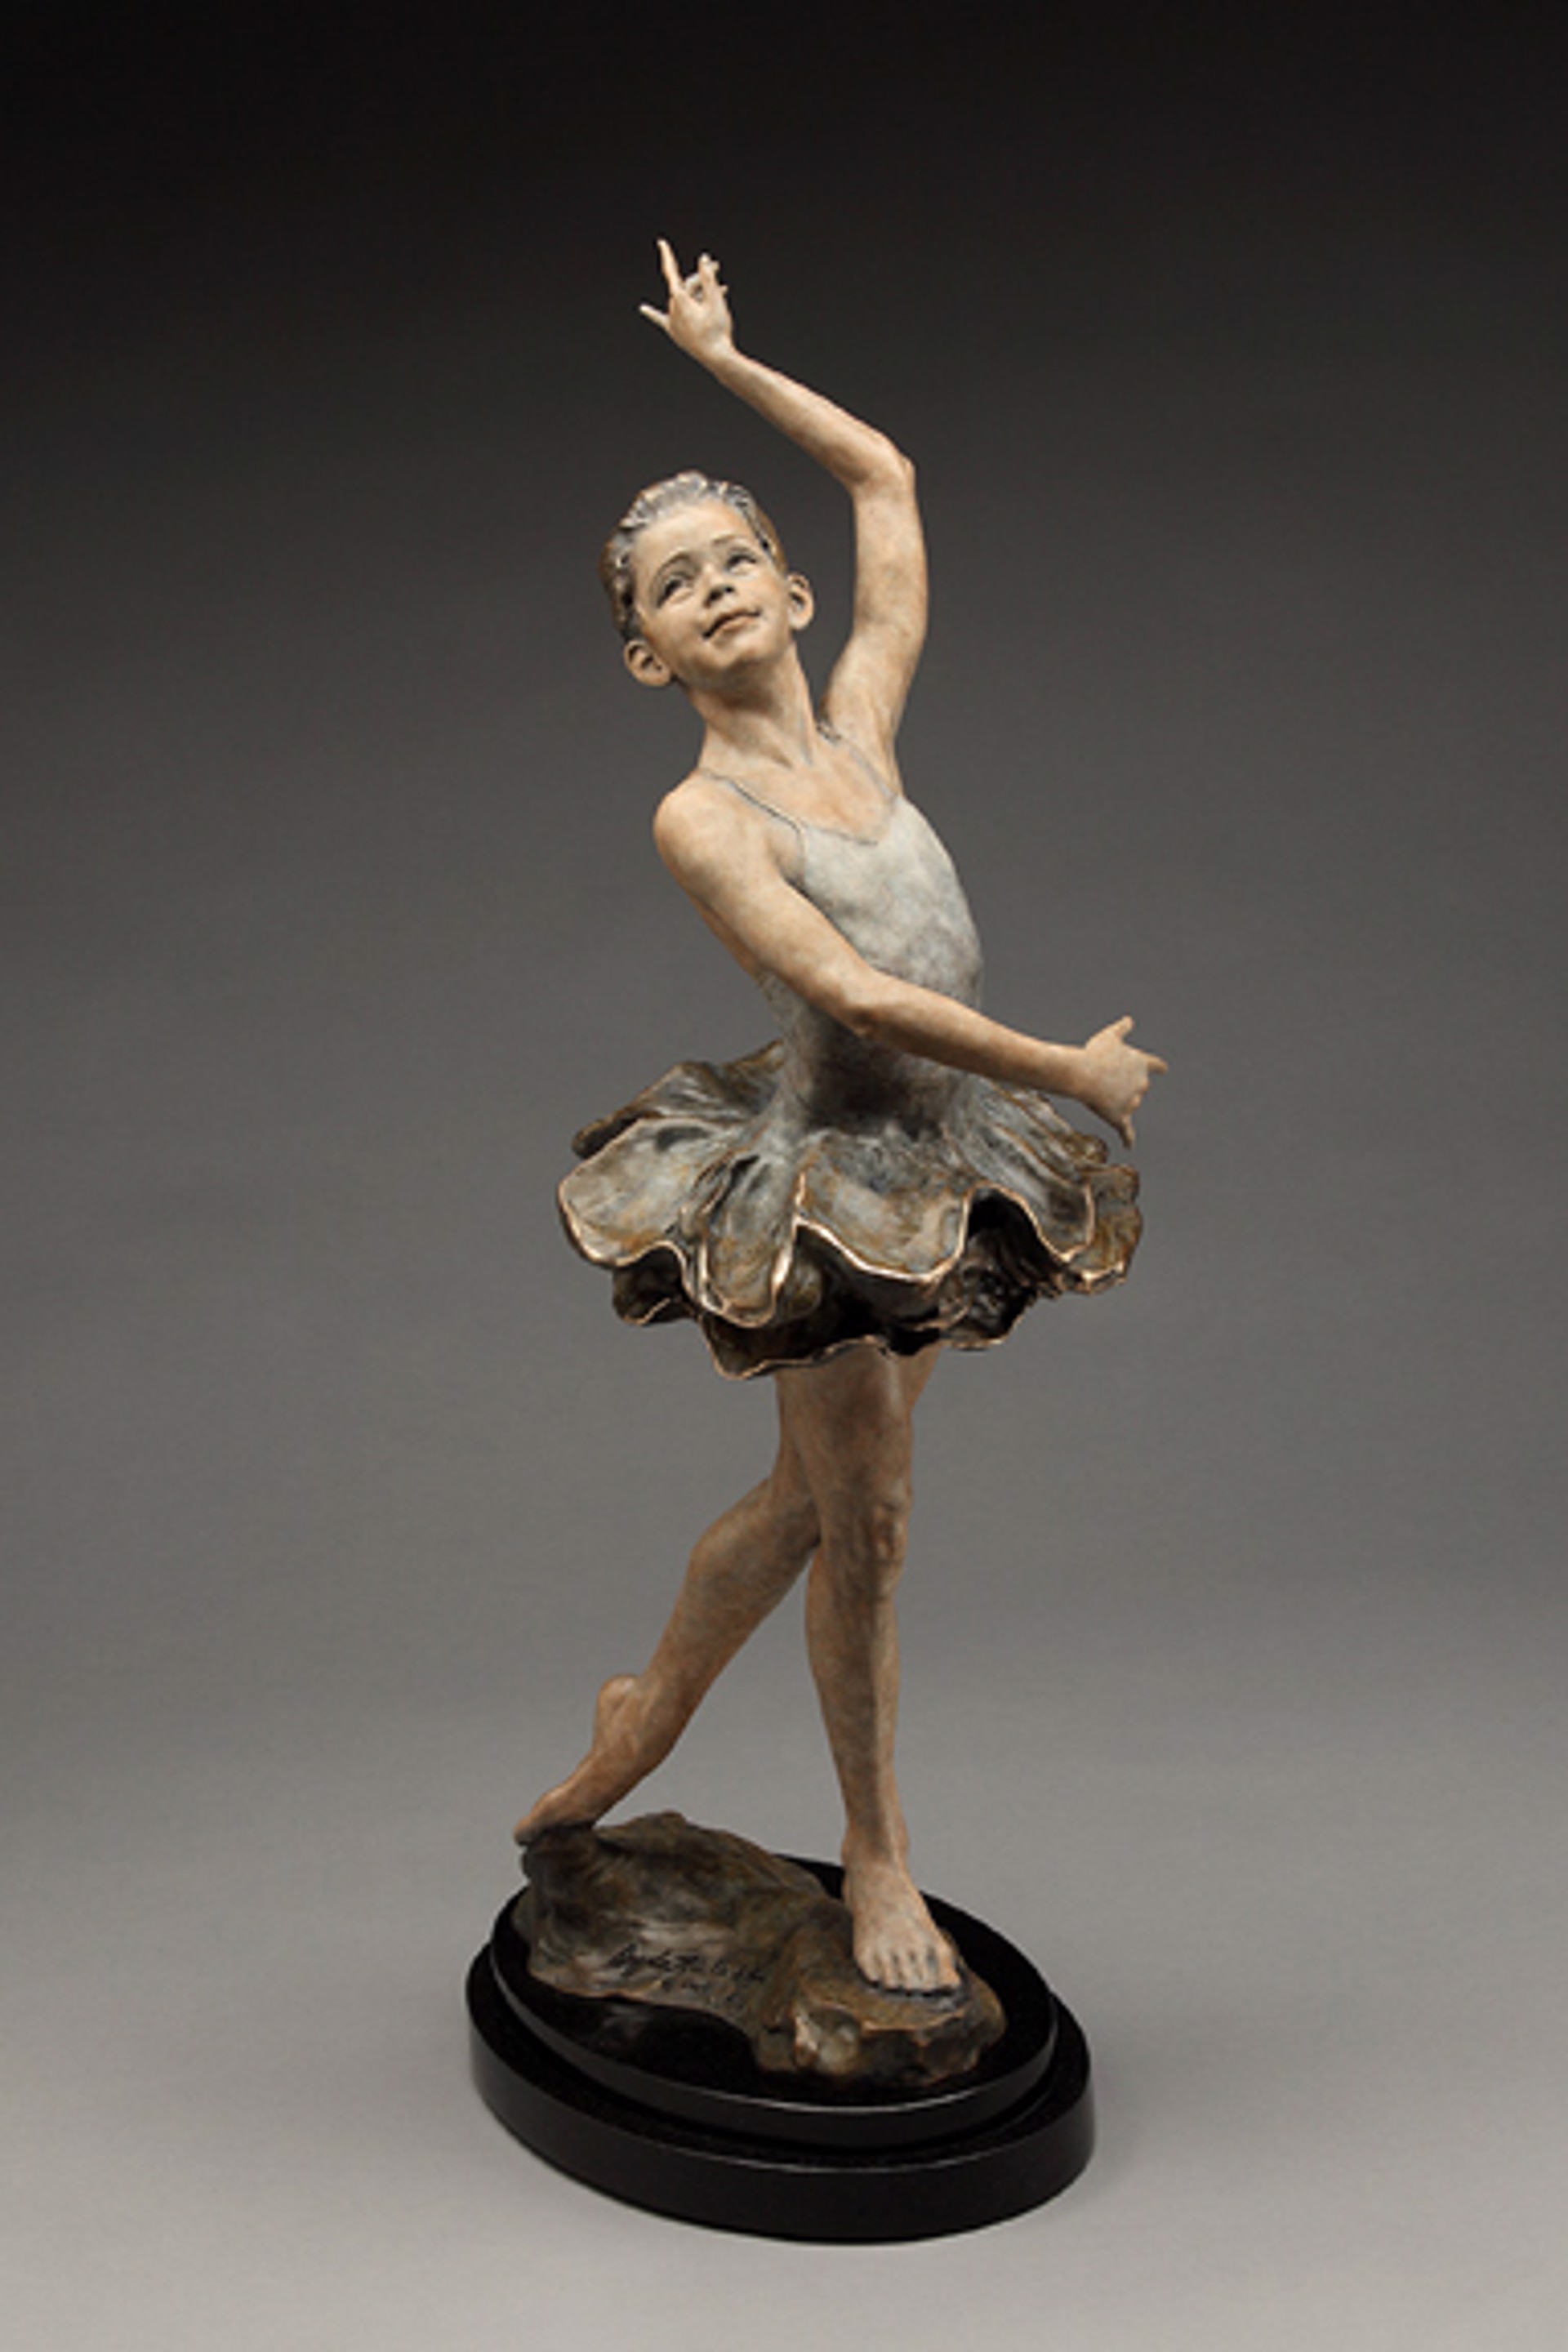 Tiny Dancer 1/2 Life Size by Angela Mia De la Vega